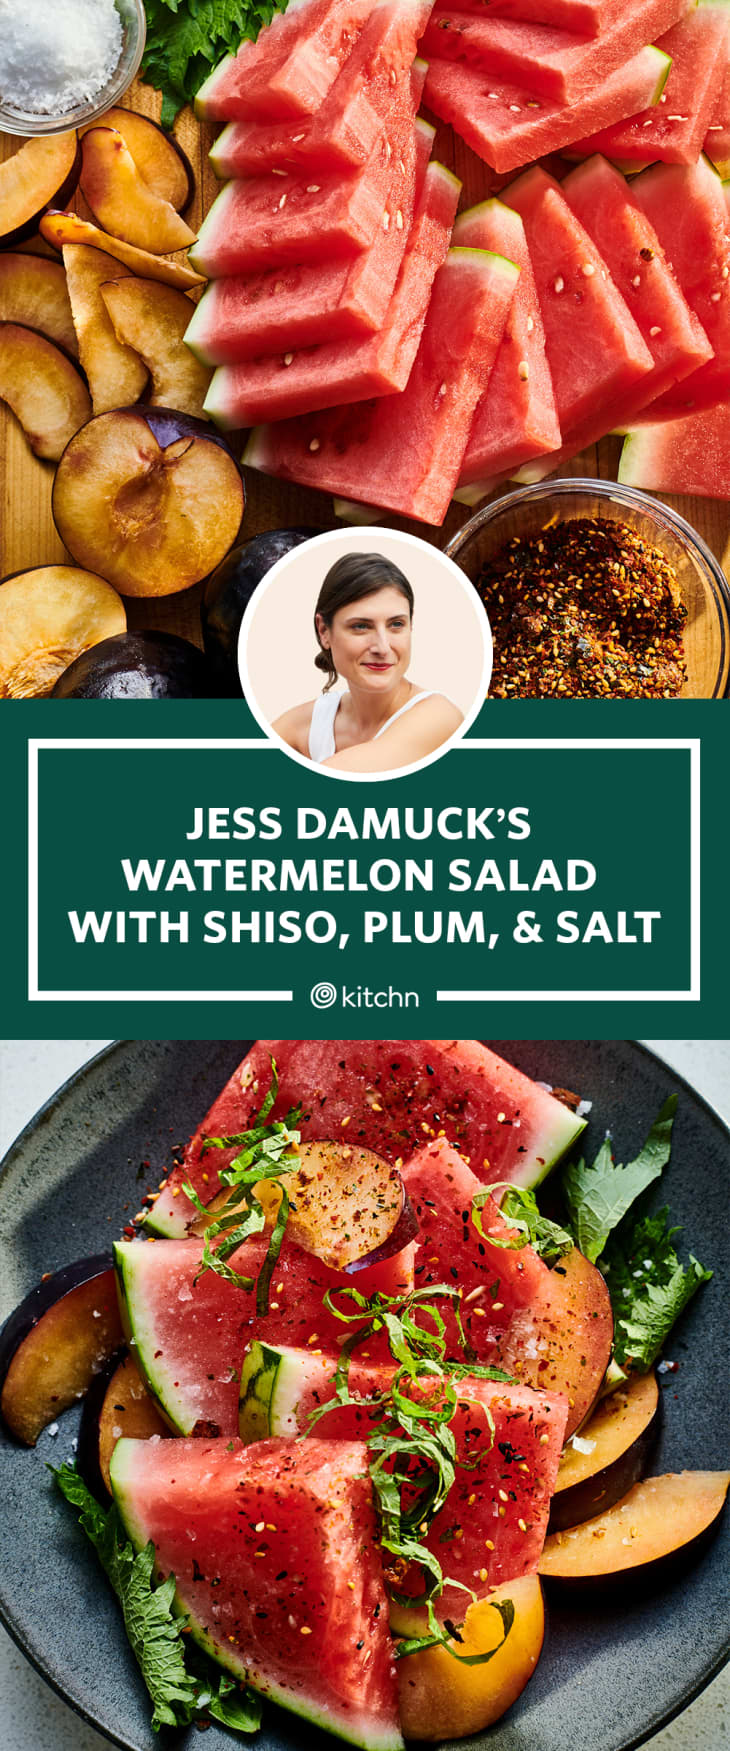 Photos of Jess Damuck's watermelon salad recipe.